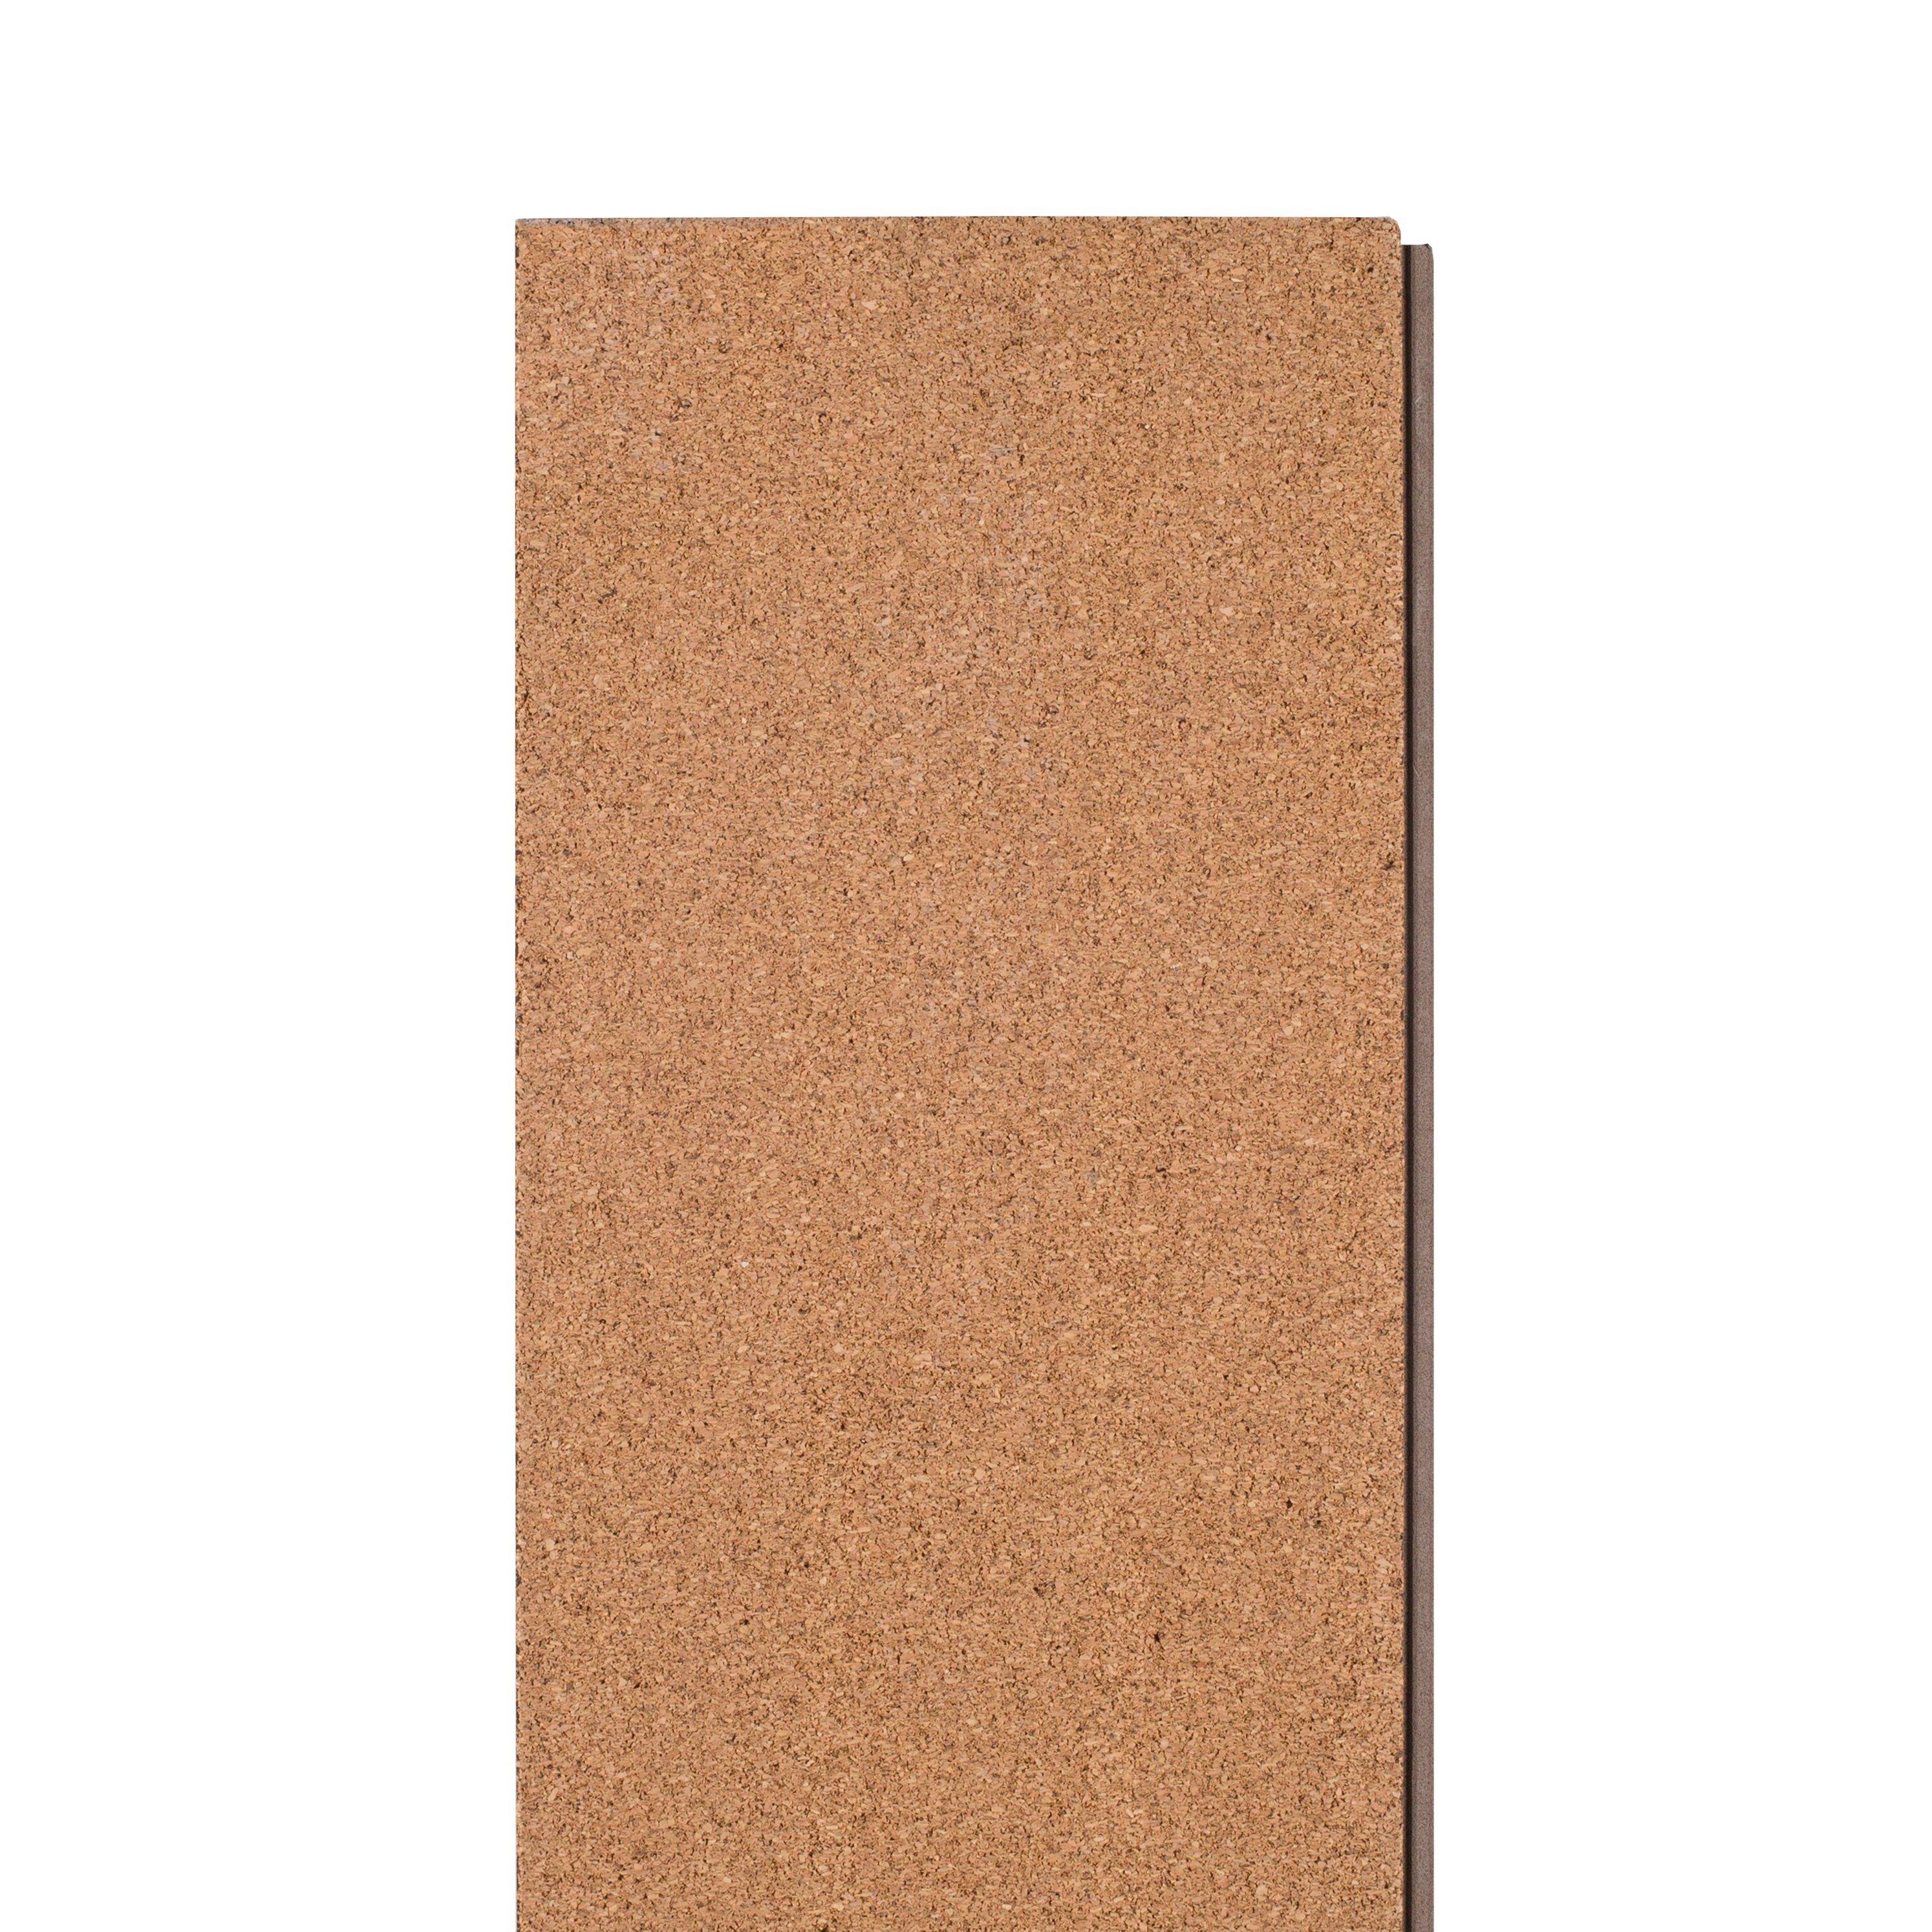 Satin Pewter Rigid Core Luxury Vinyl Plank - Cork Back